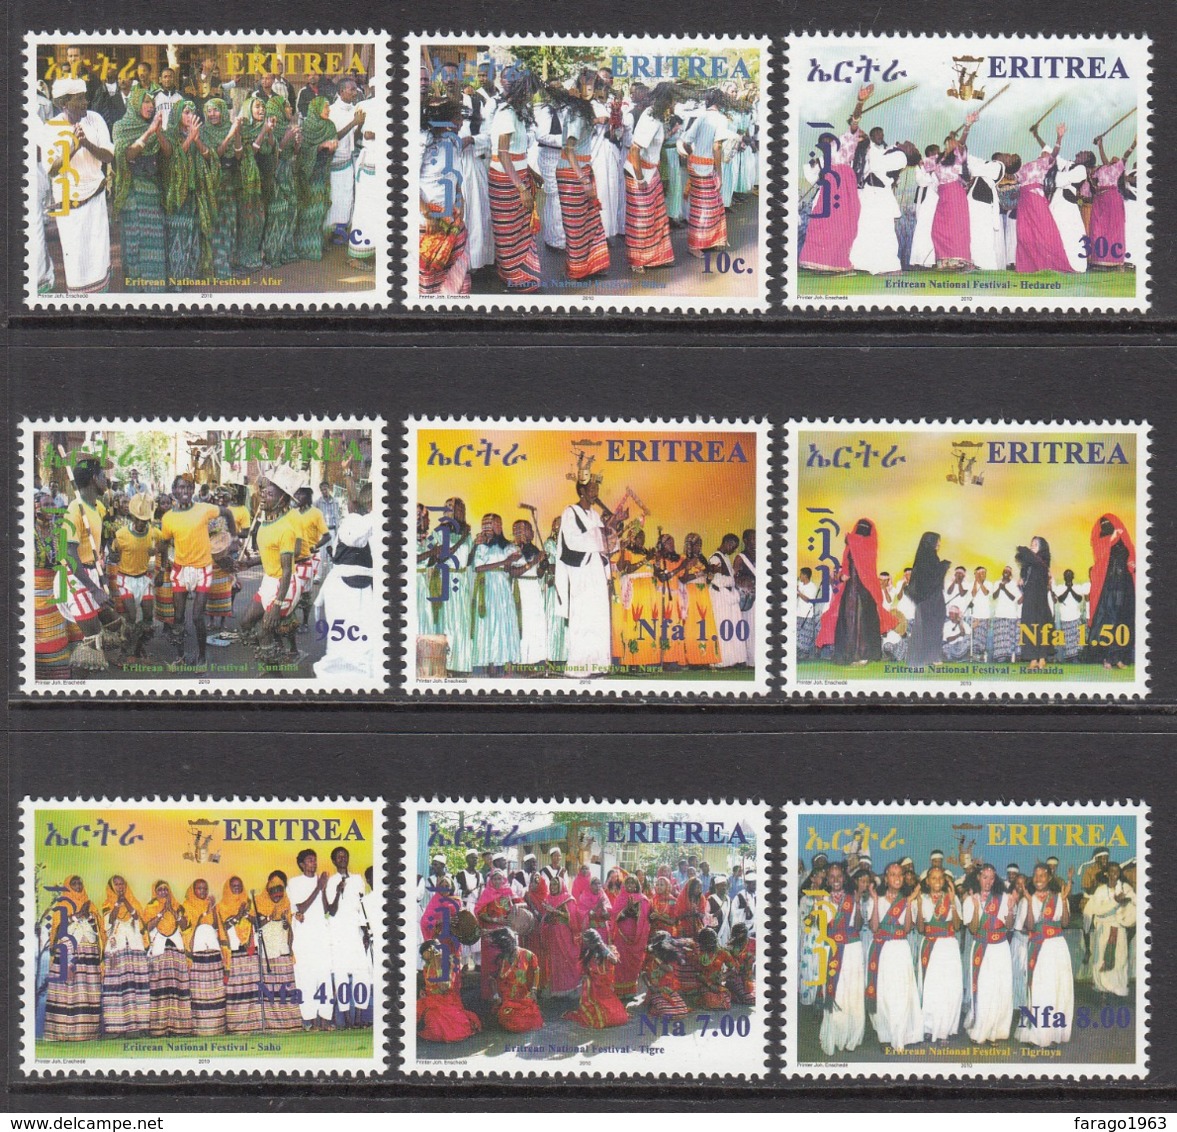 2010 Eritrea Festival Culture Costumes  Complete Set Of 9 MNH - Eritrea